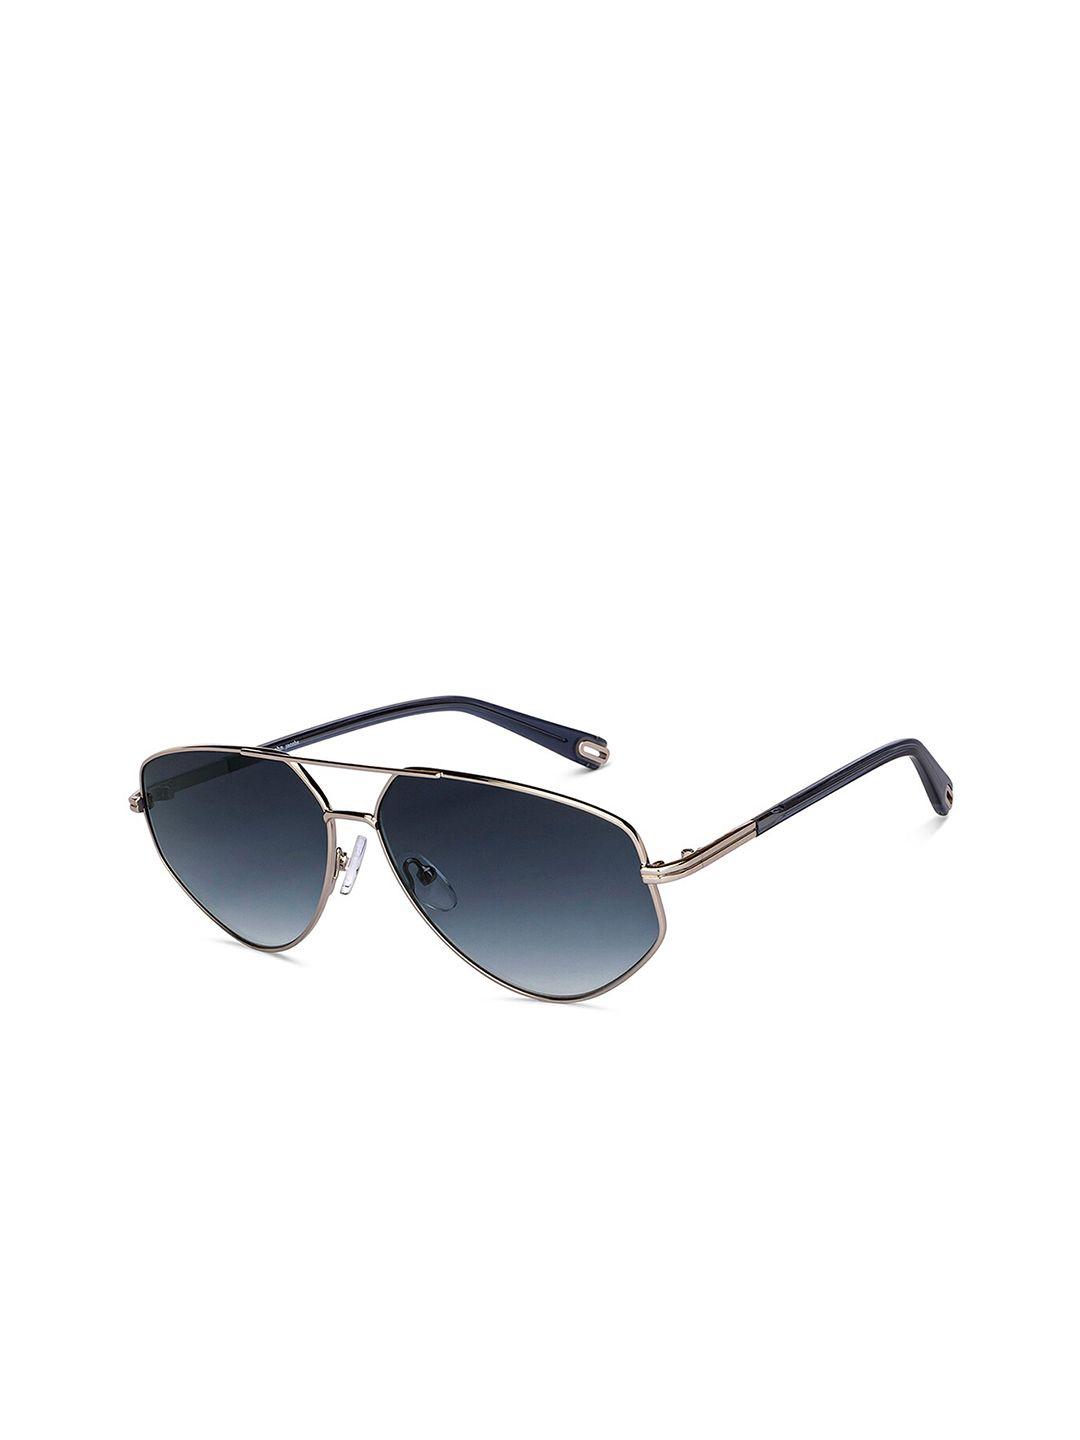 john jacobs unisex blue lens aviator sunglasses with uv protected lens 151016